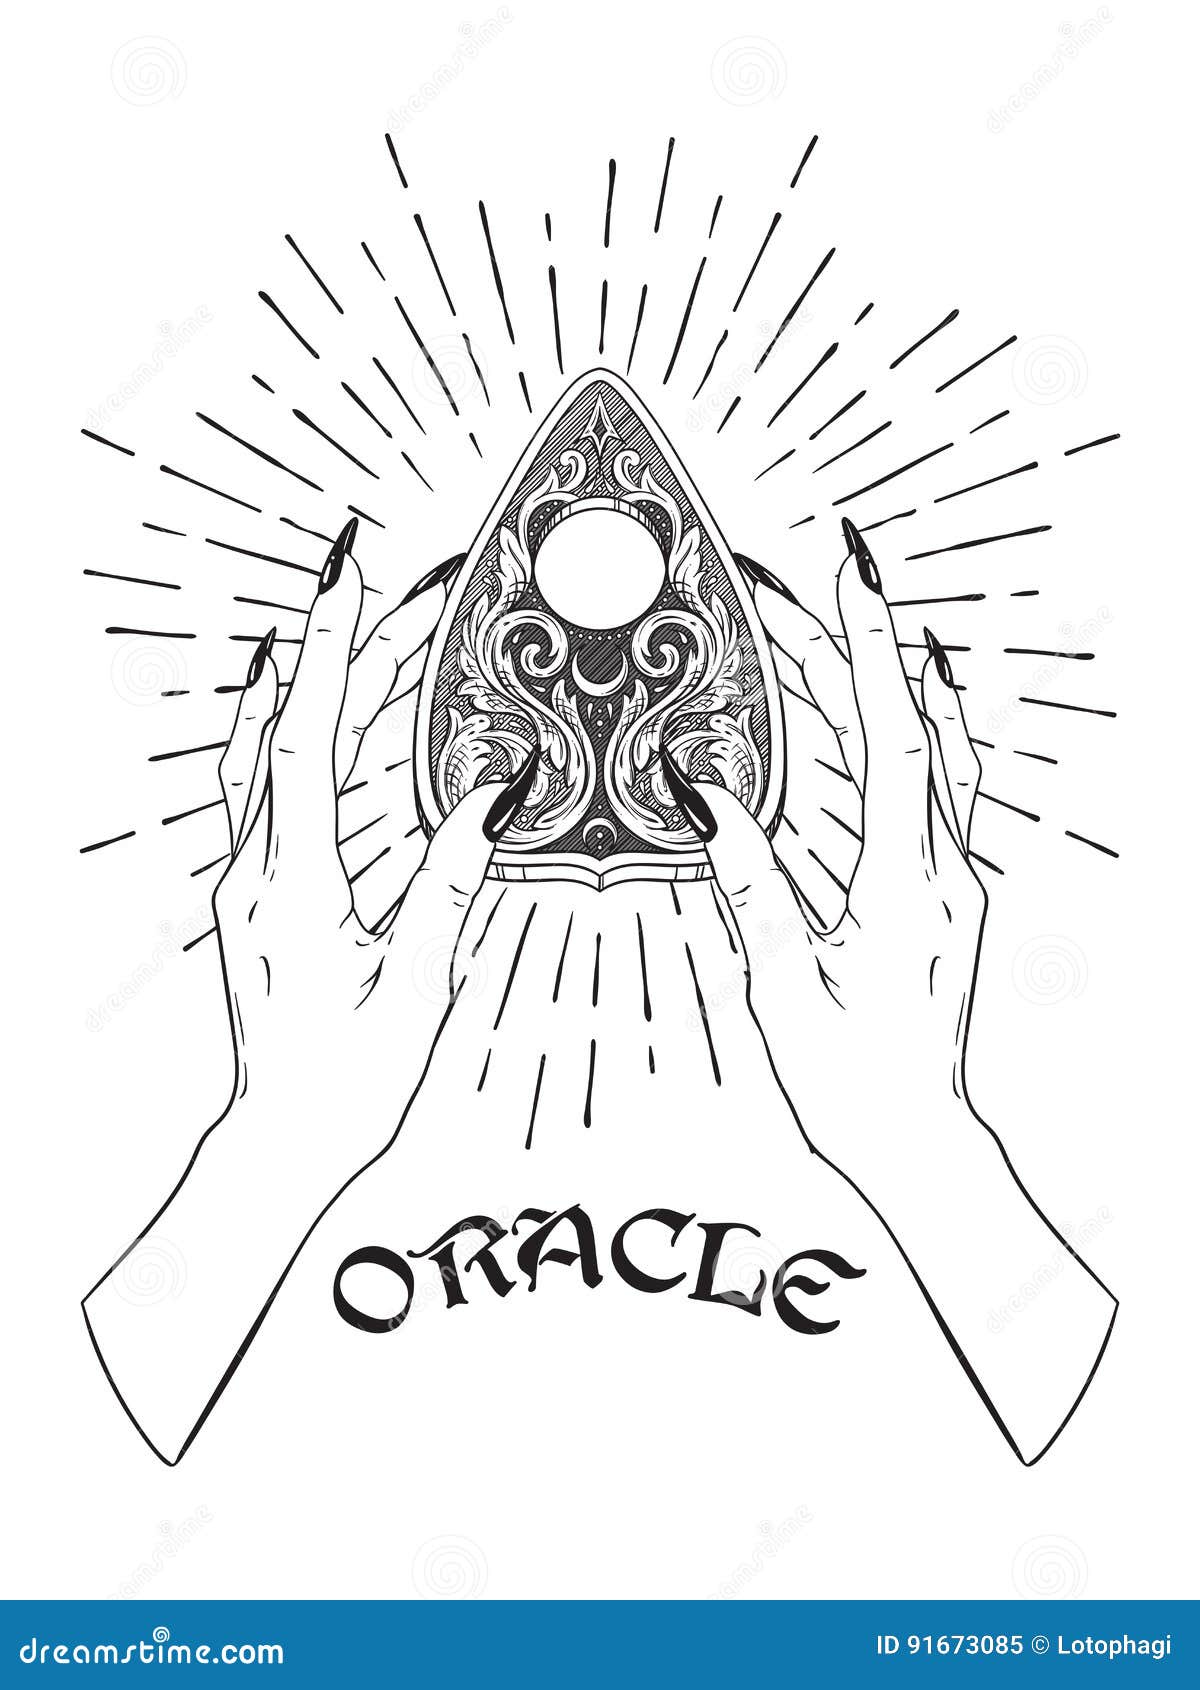 hand drawn ornate ouija board mystifying oracle planchette in female hands . blackwork style boho chic sticker, poster, ta